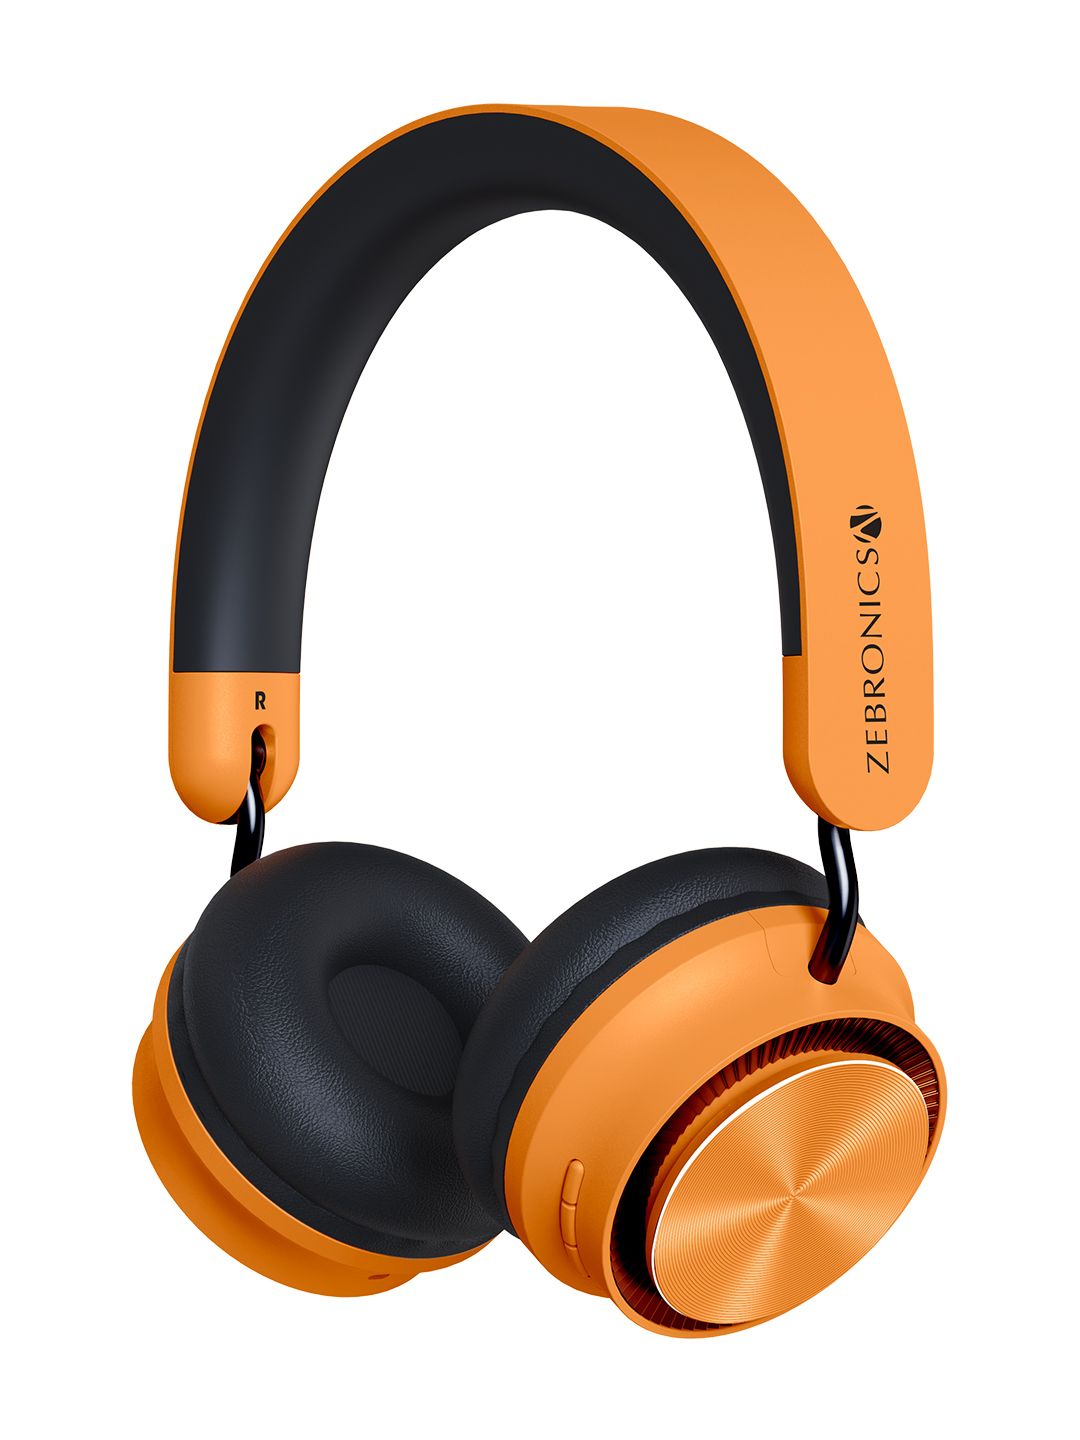 ZEBRONICS Zeb-Bang PRO Bluetooth v5.0 Headphone - Orange Price in India